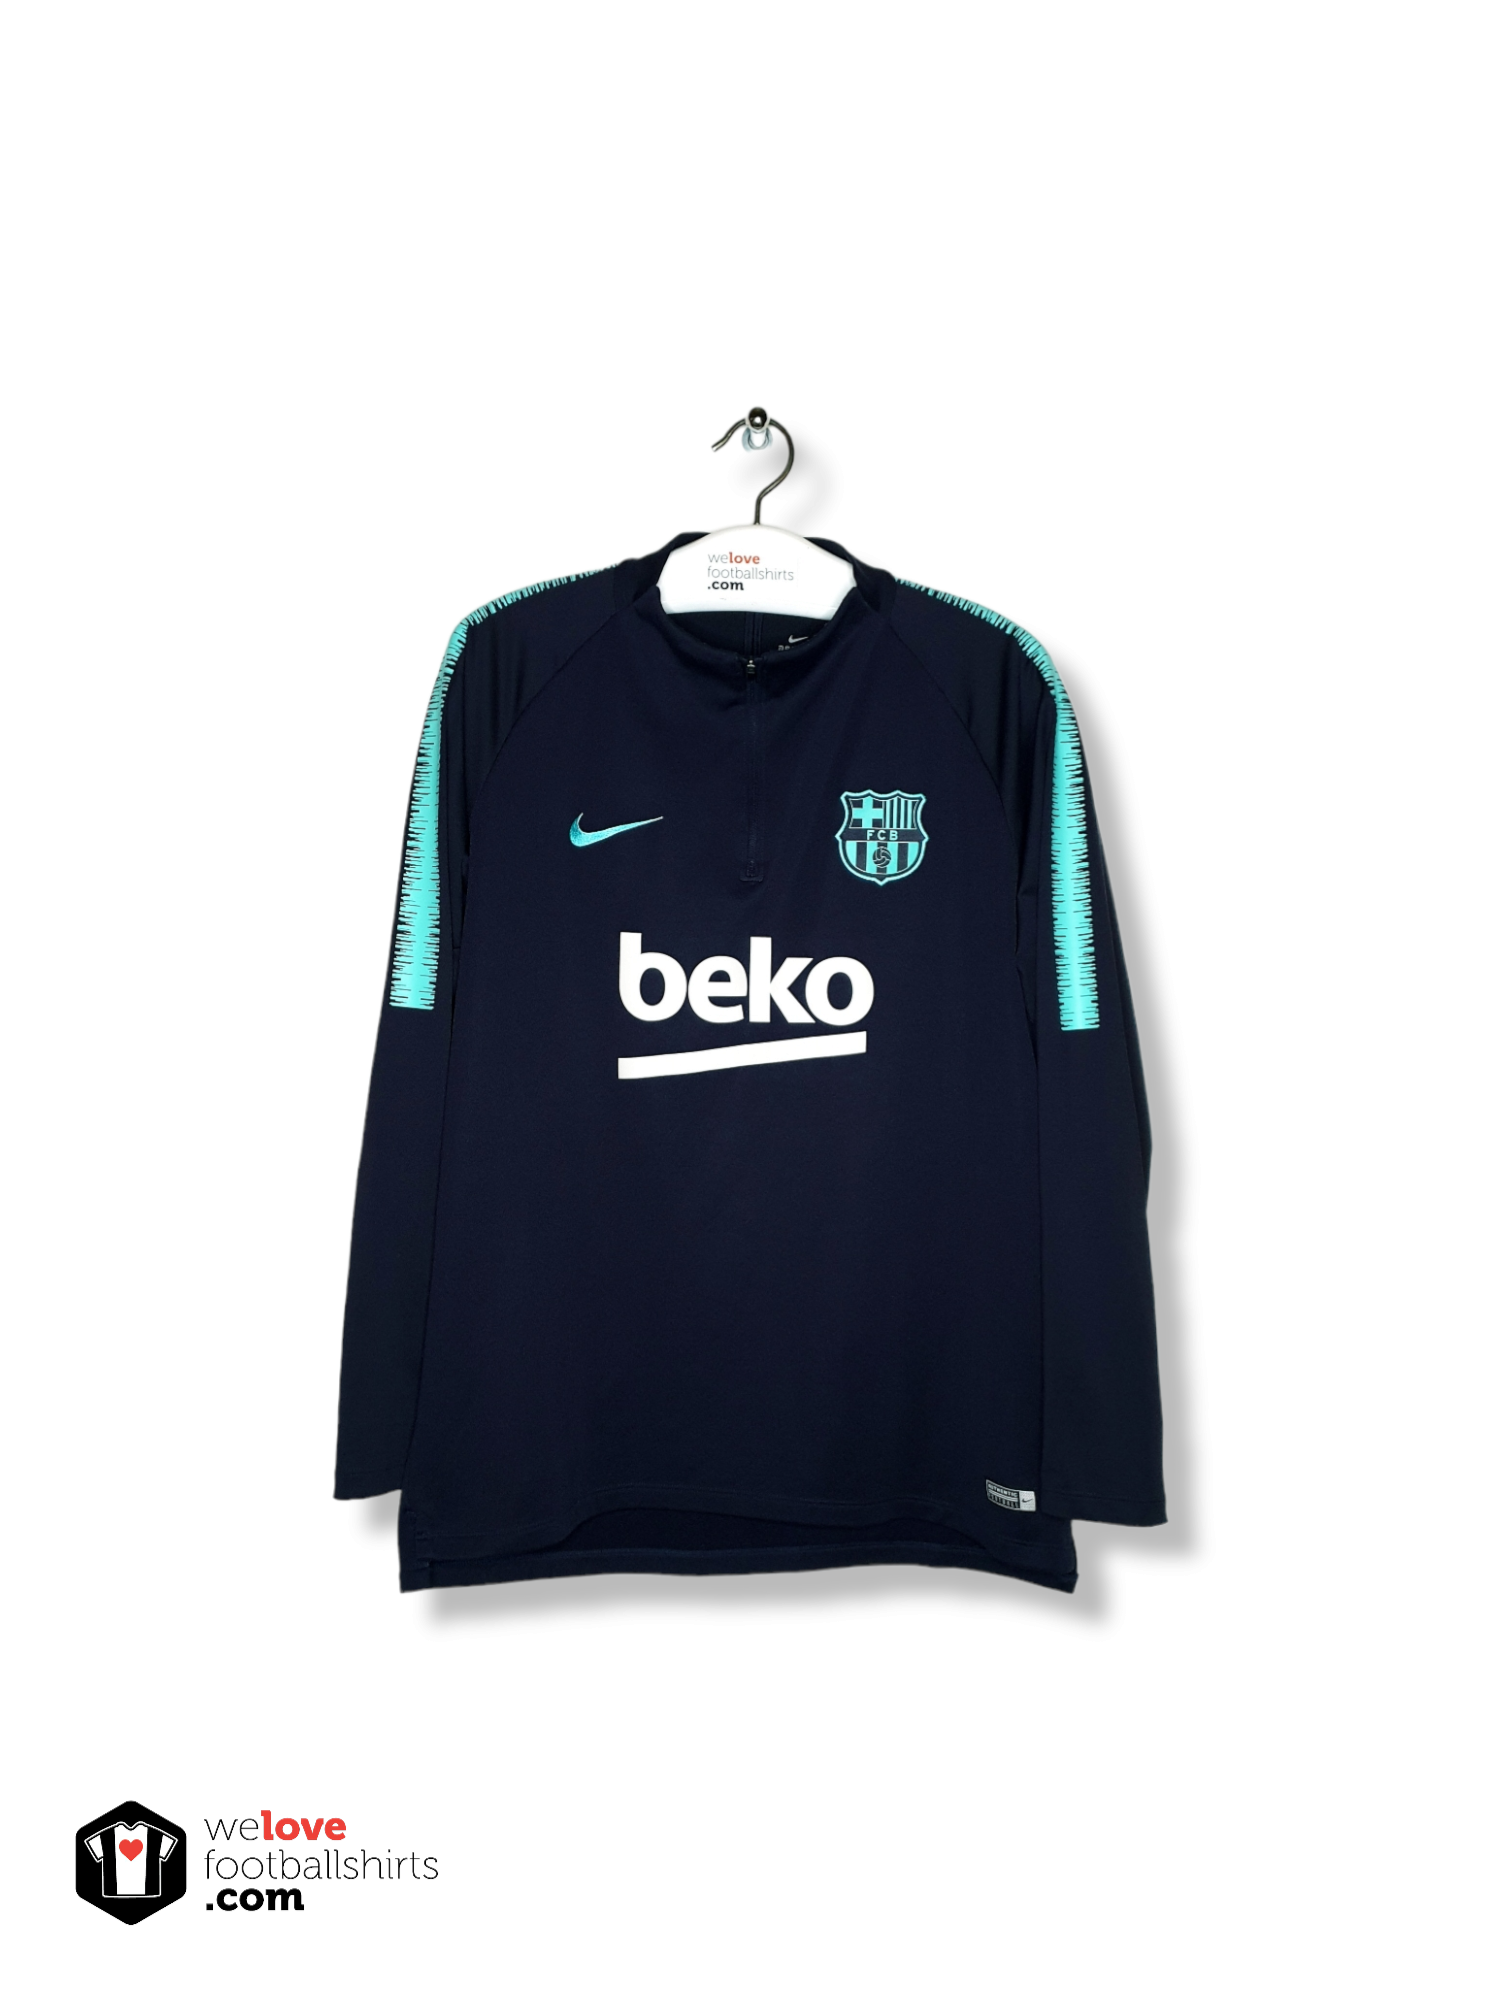 Profeet Word gek IJver Nike voetbal pullover FC Barcelona 2019/20 - Welovefootballshirts.com